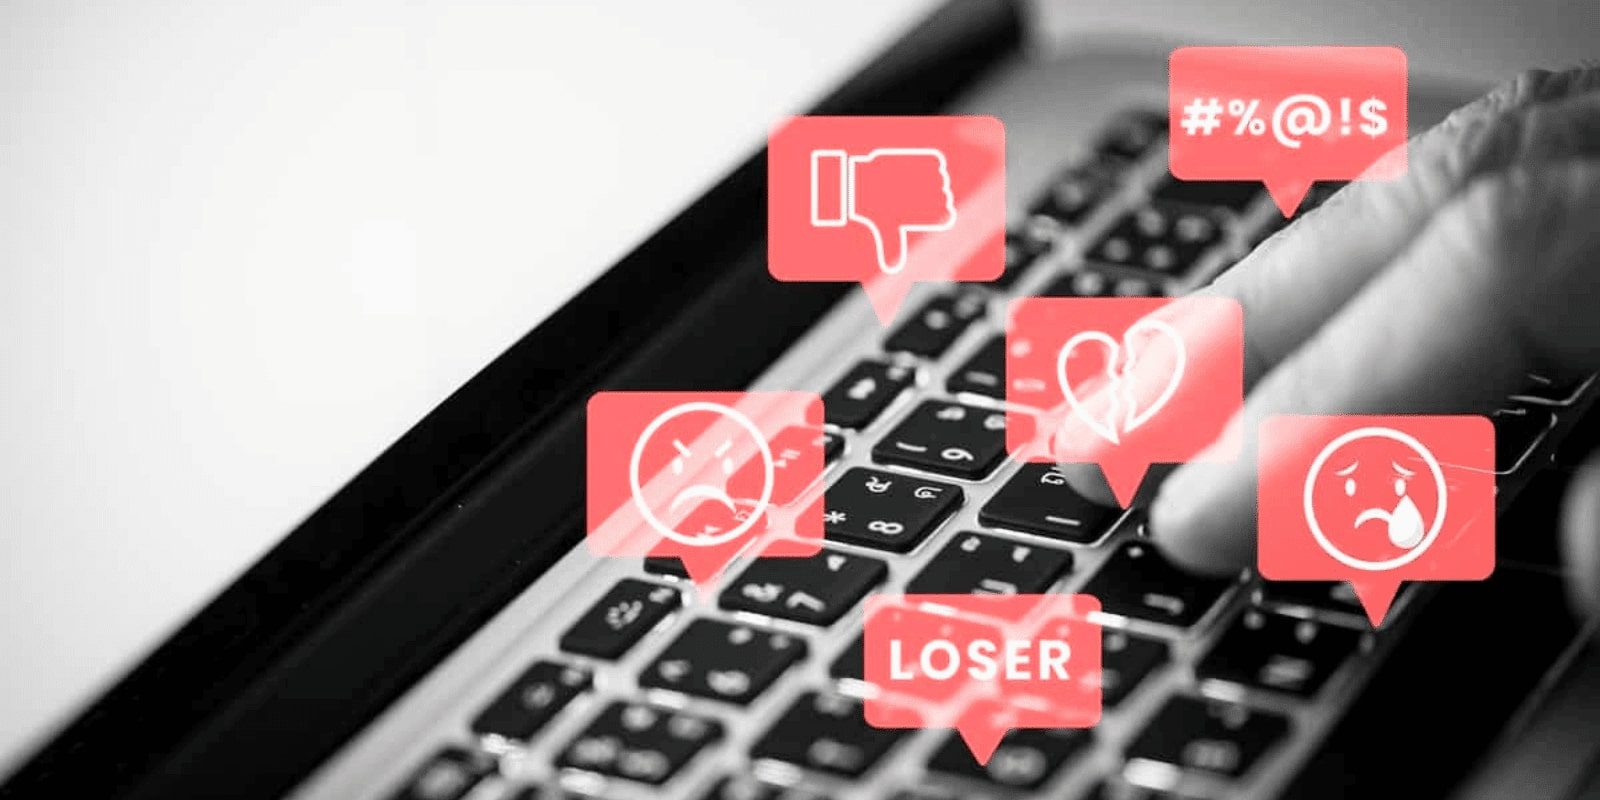 cyber bullying on social media